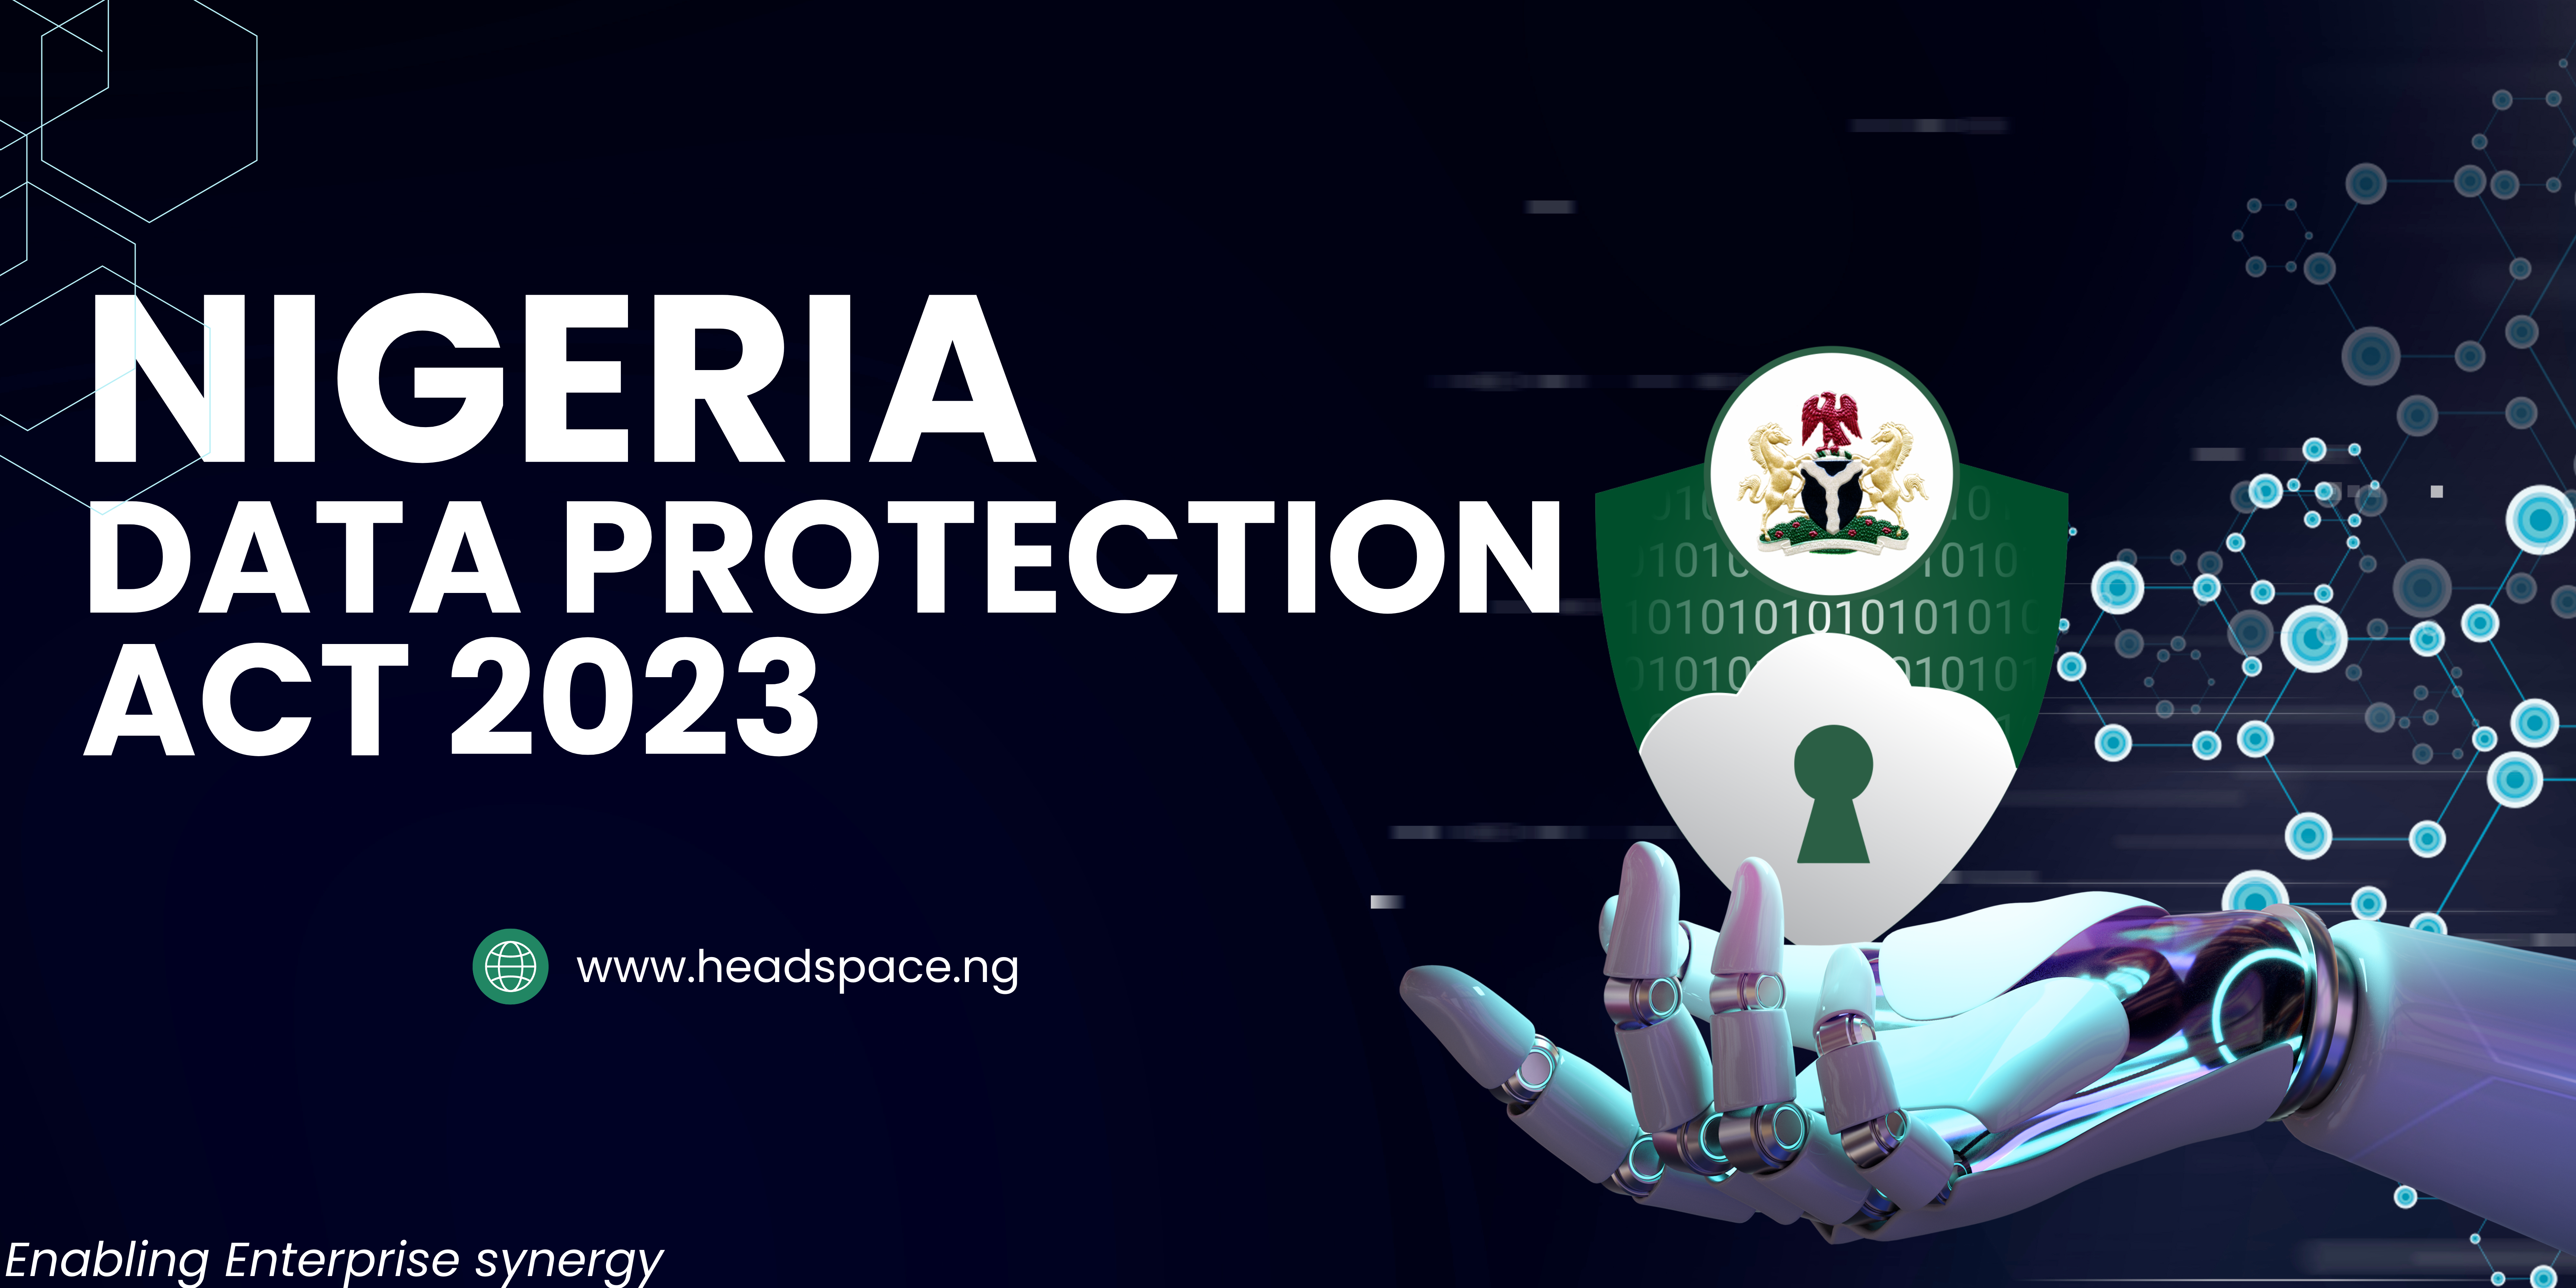 Nigeria Data Protection Act 2023